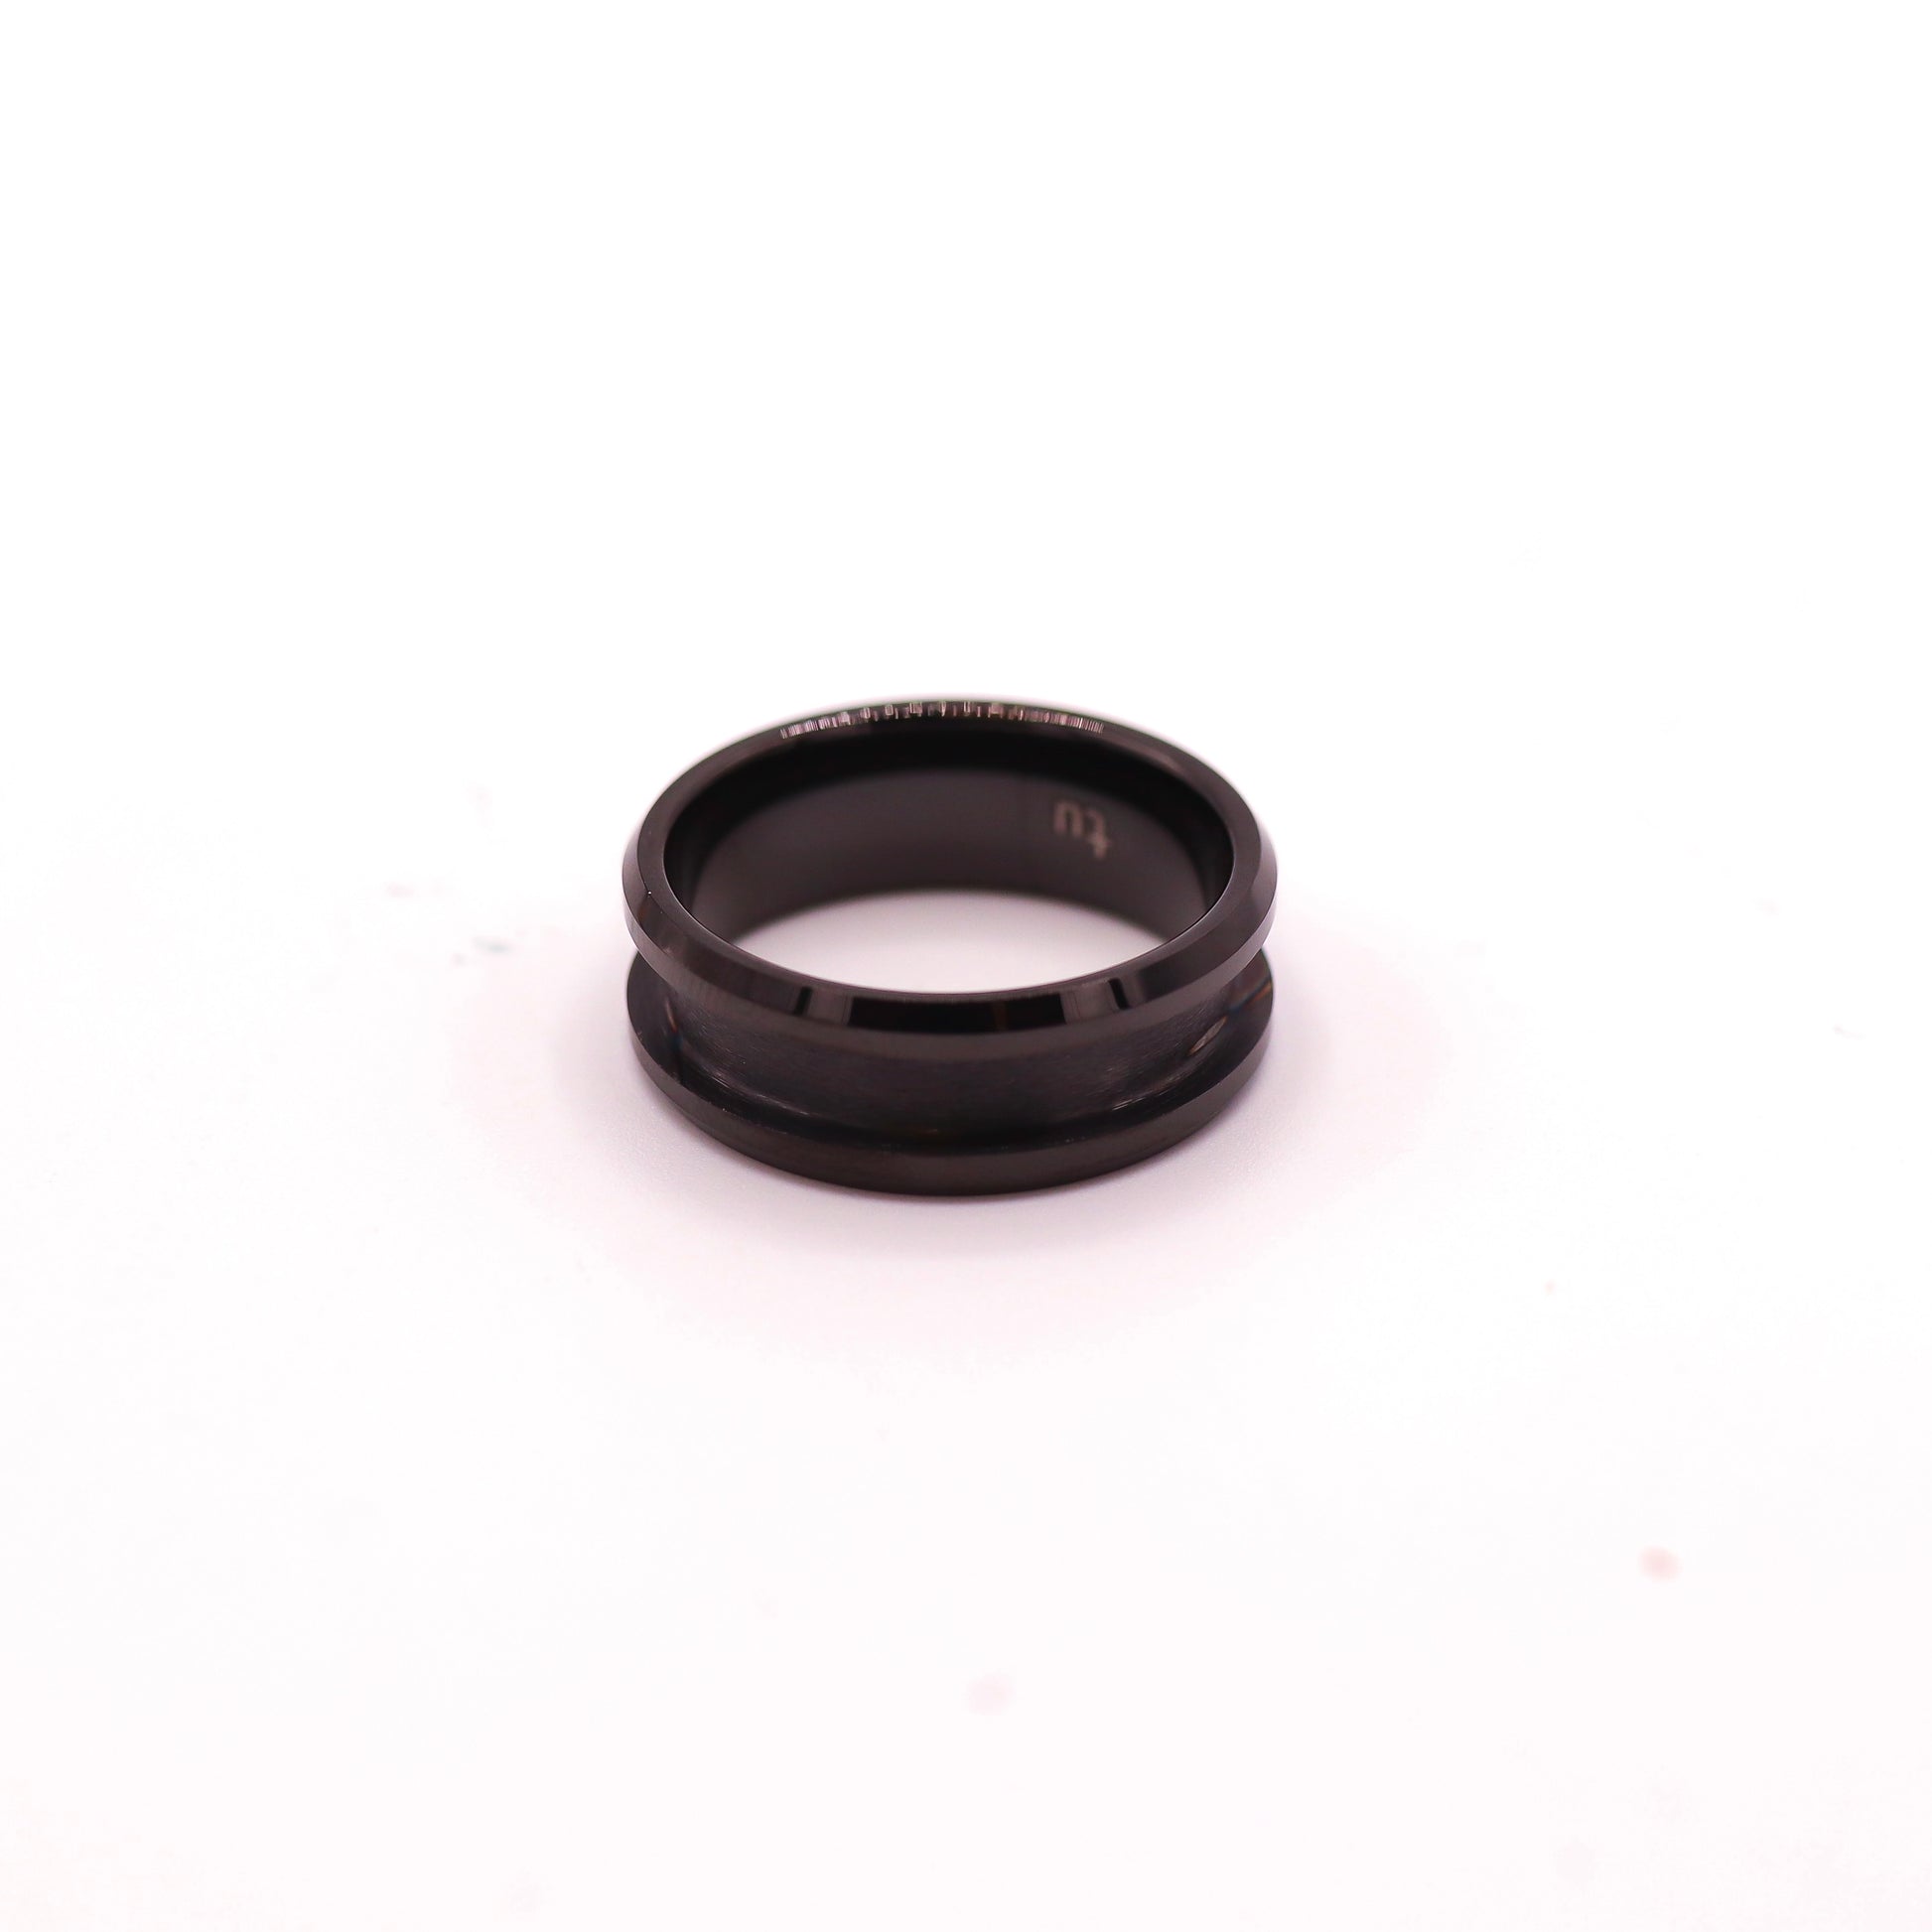 Black-Plated Tungsten Ring Blank - Patrick Adair Supplies